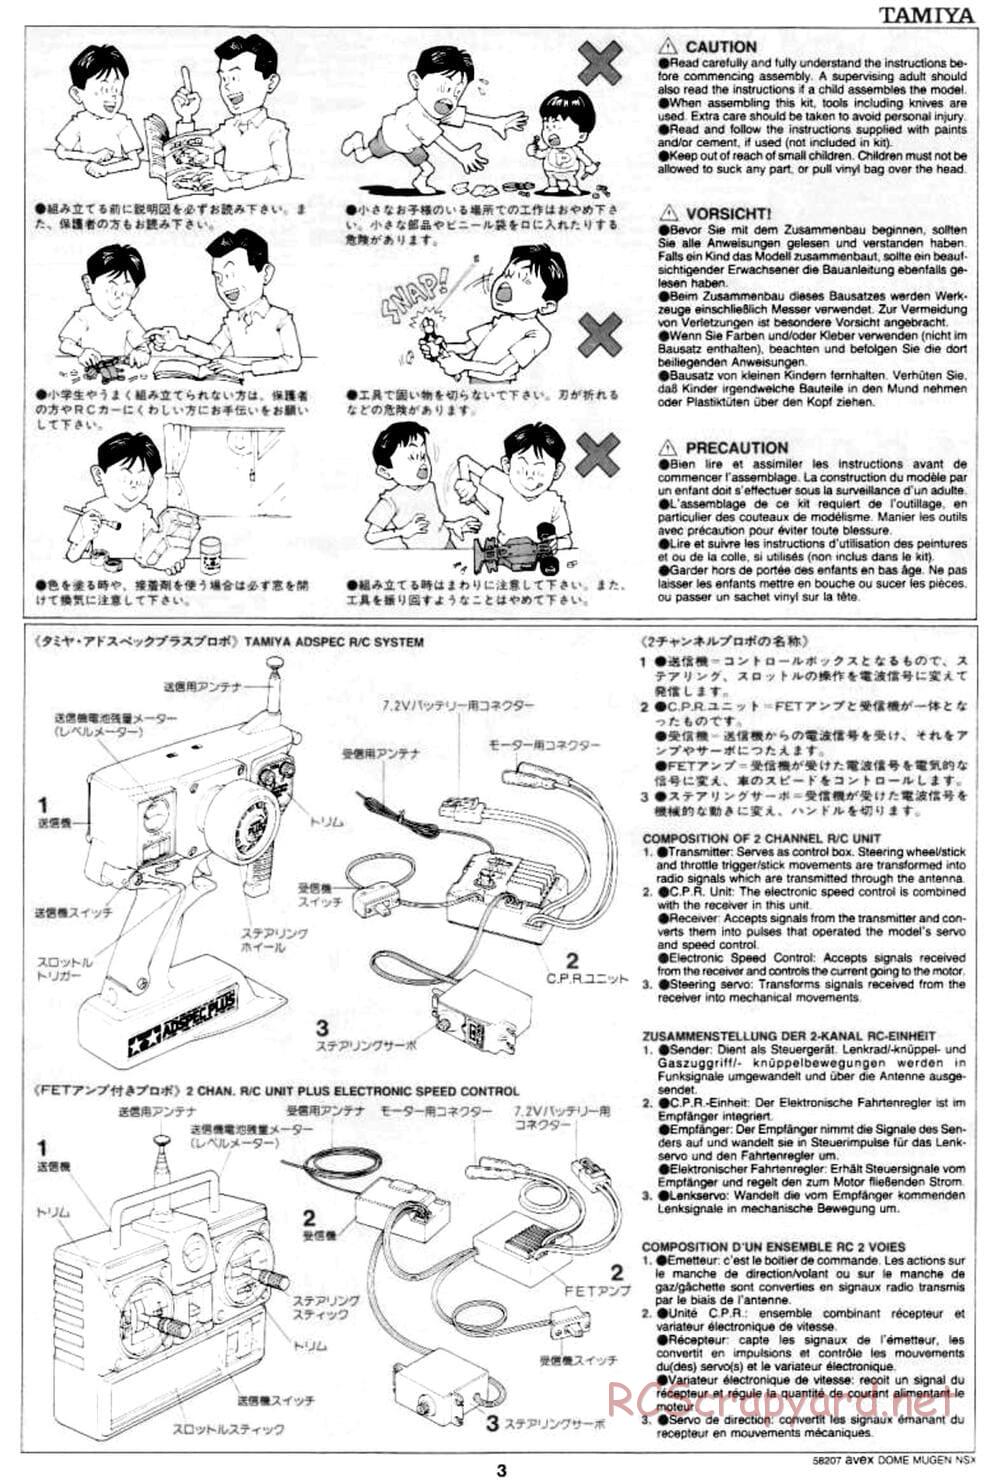 Tamiya - Avex Dome Mugen NSX - TA-03R Chassis - Manual - Page 3